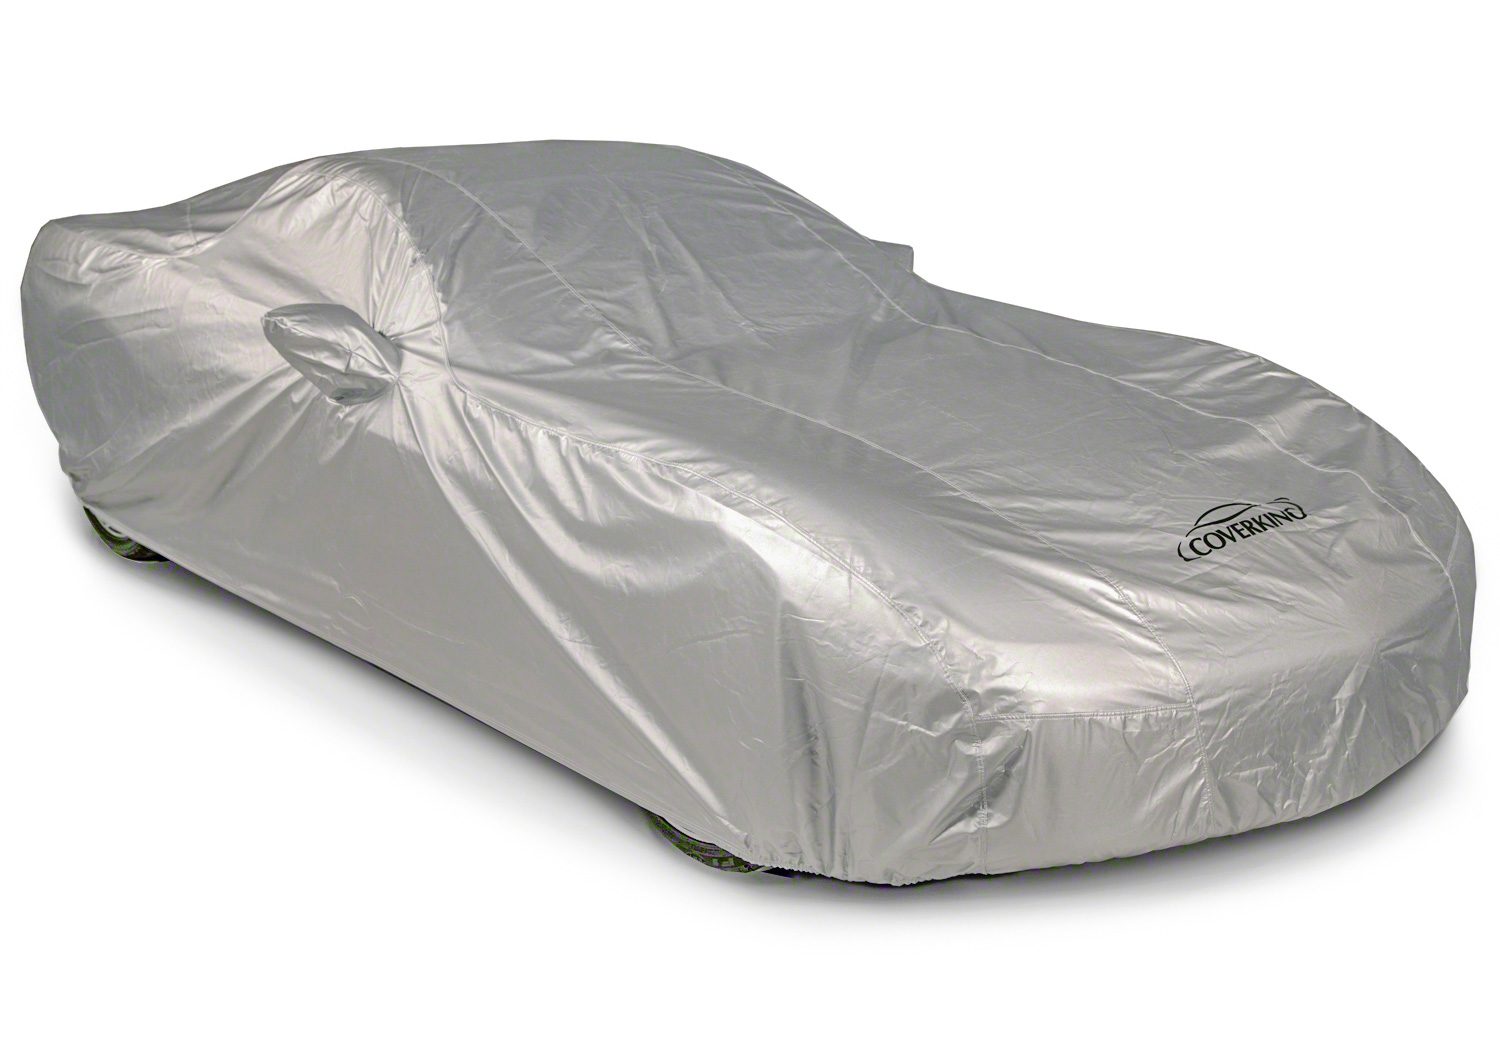 Silverguard Plus Car Cover for 2022 Chevrolet Bolt EUV 